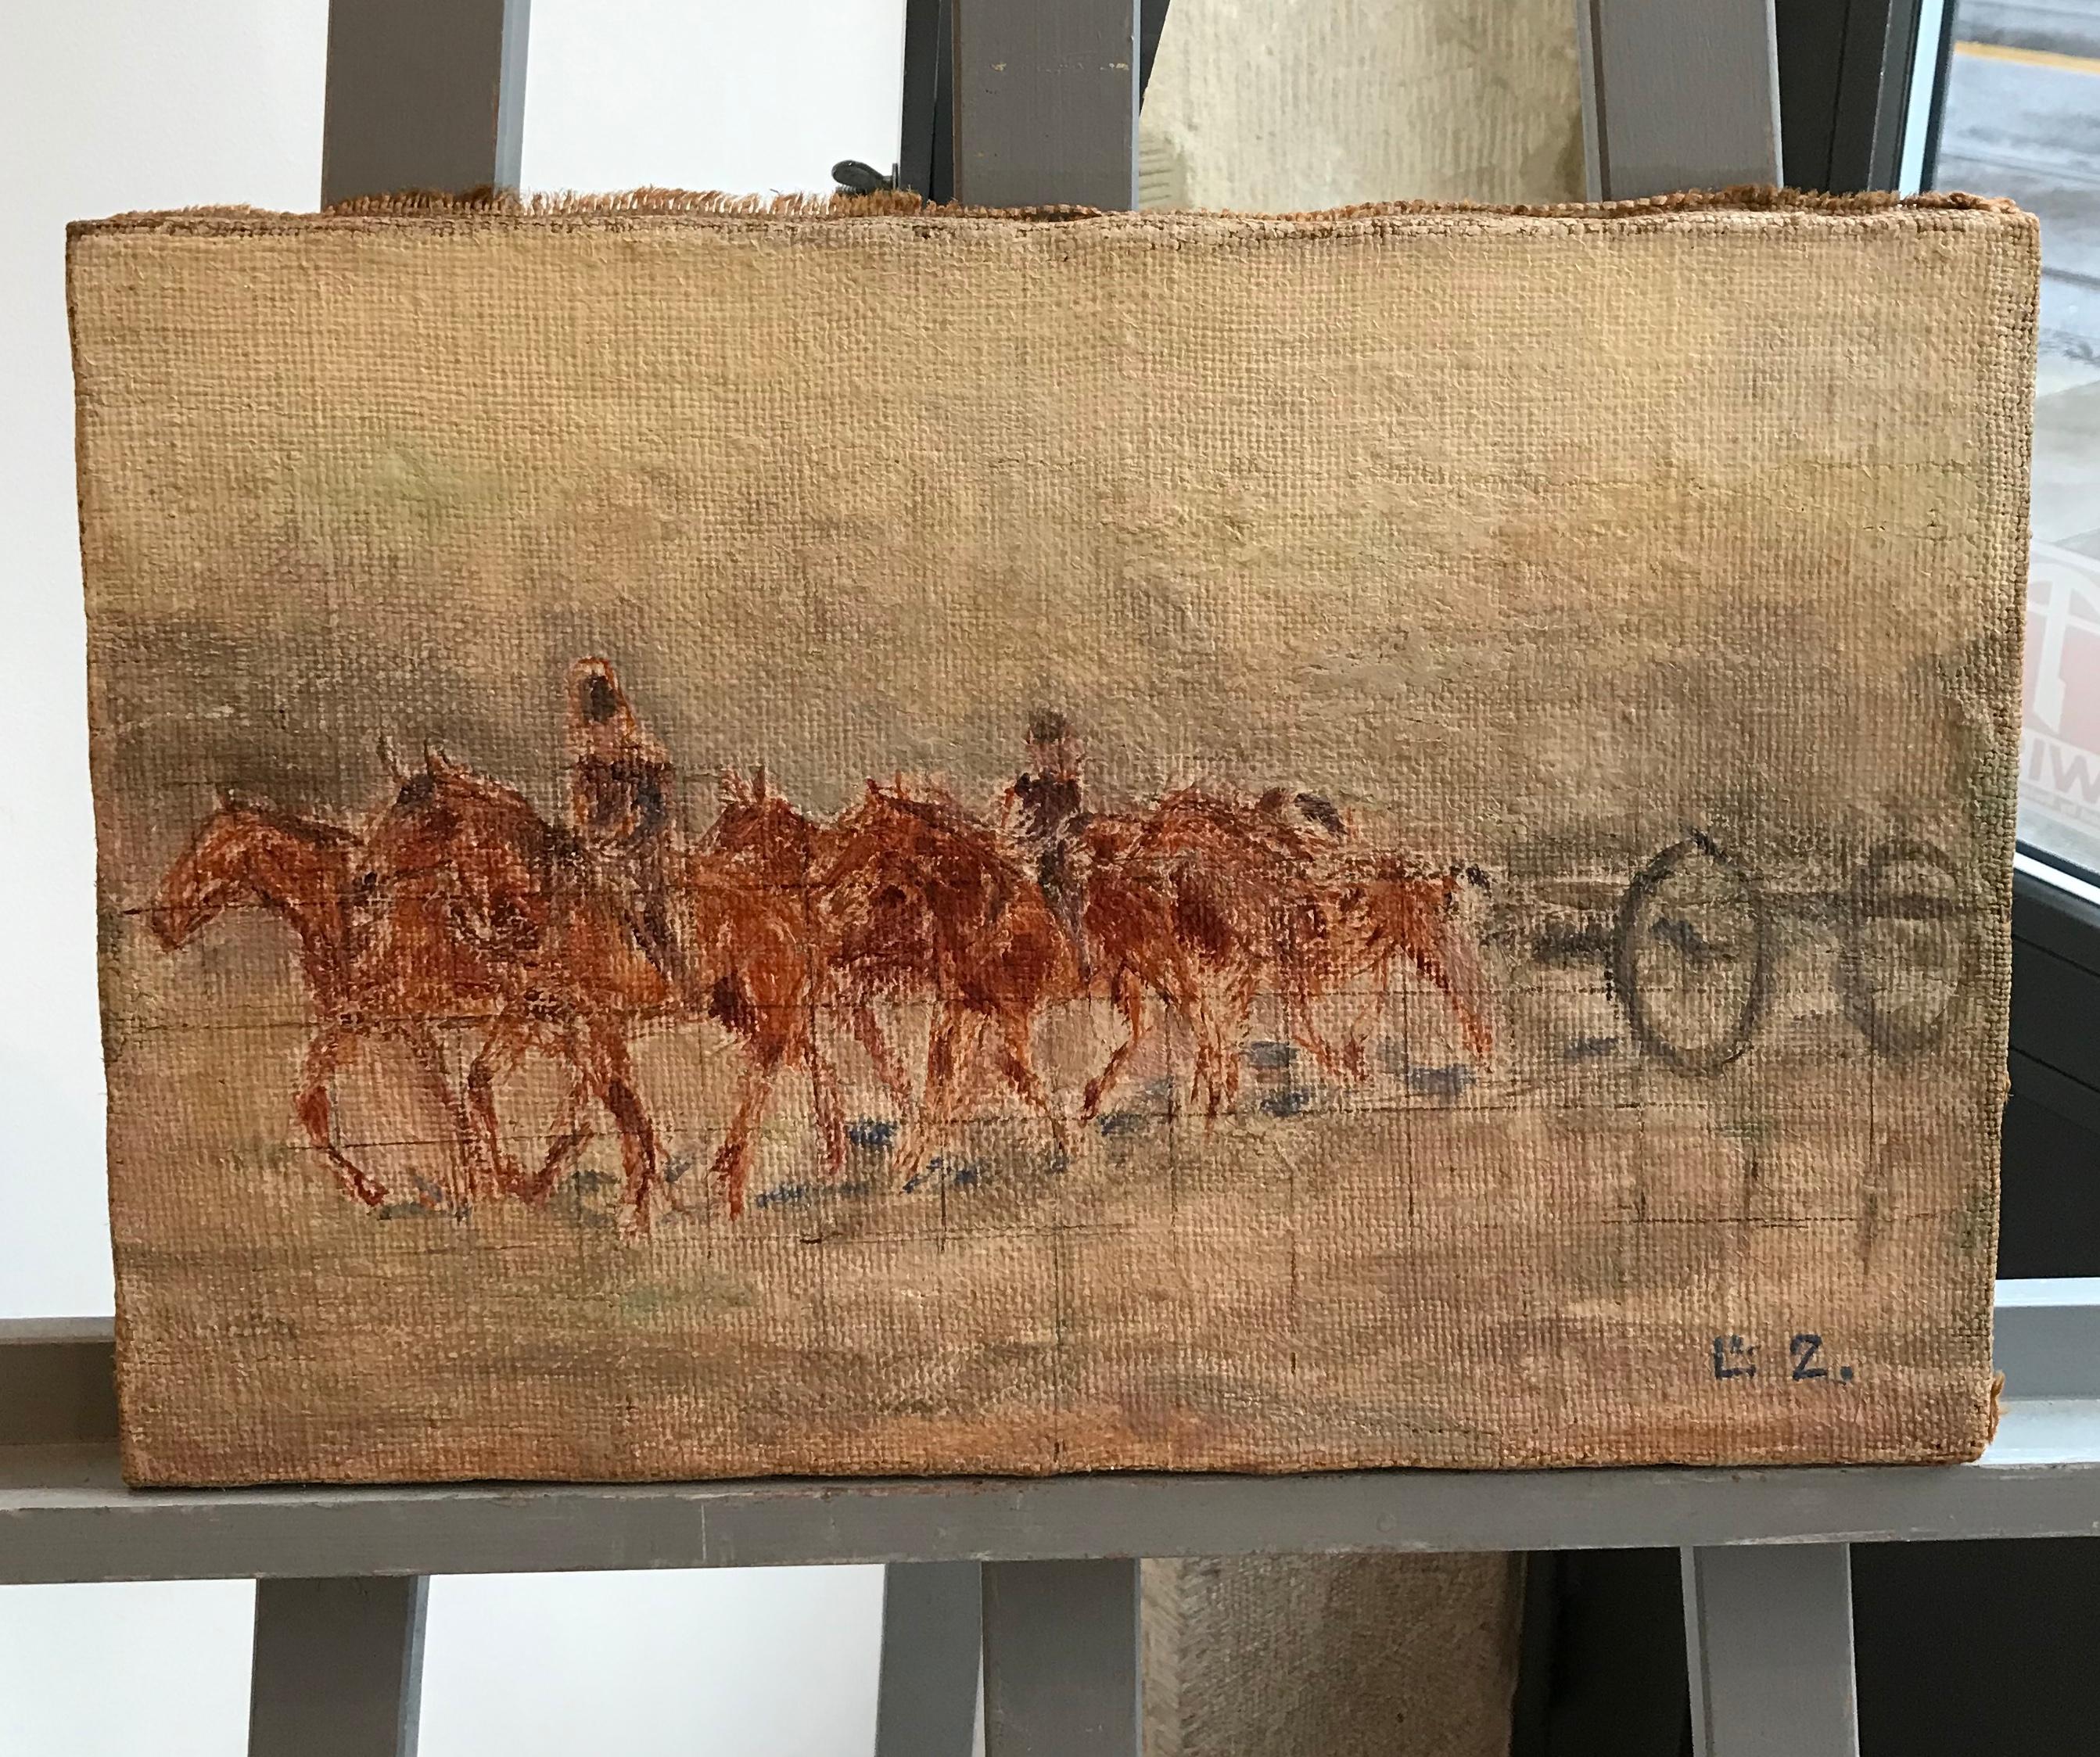 Horses race - Painting by Louis Henri Salzmann